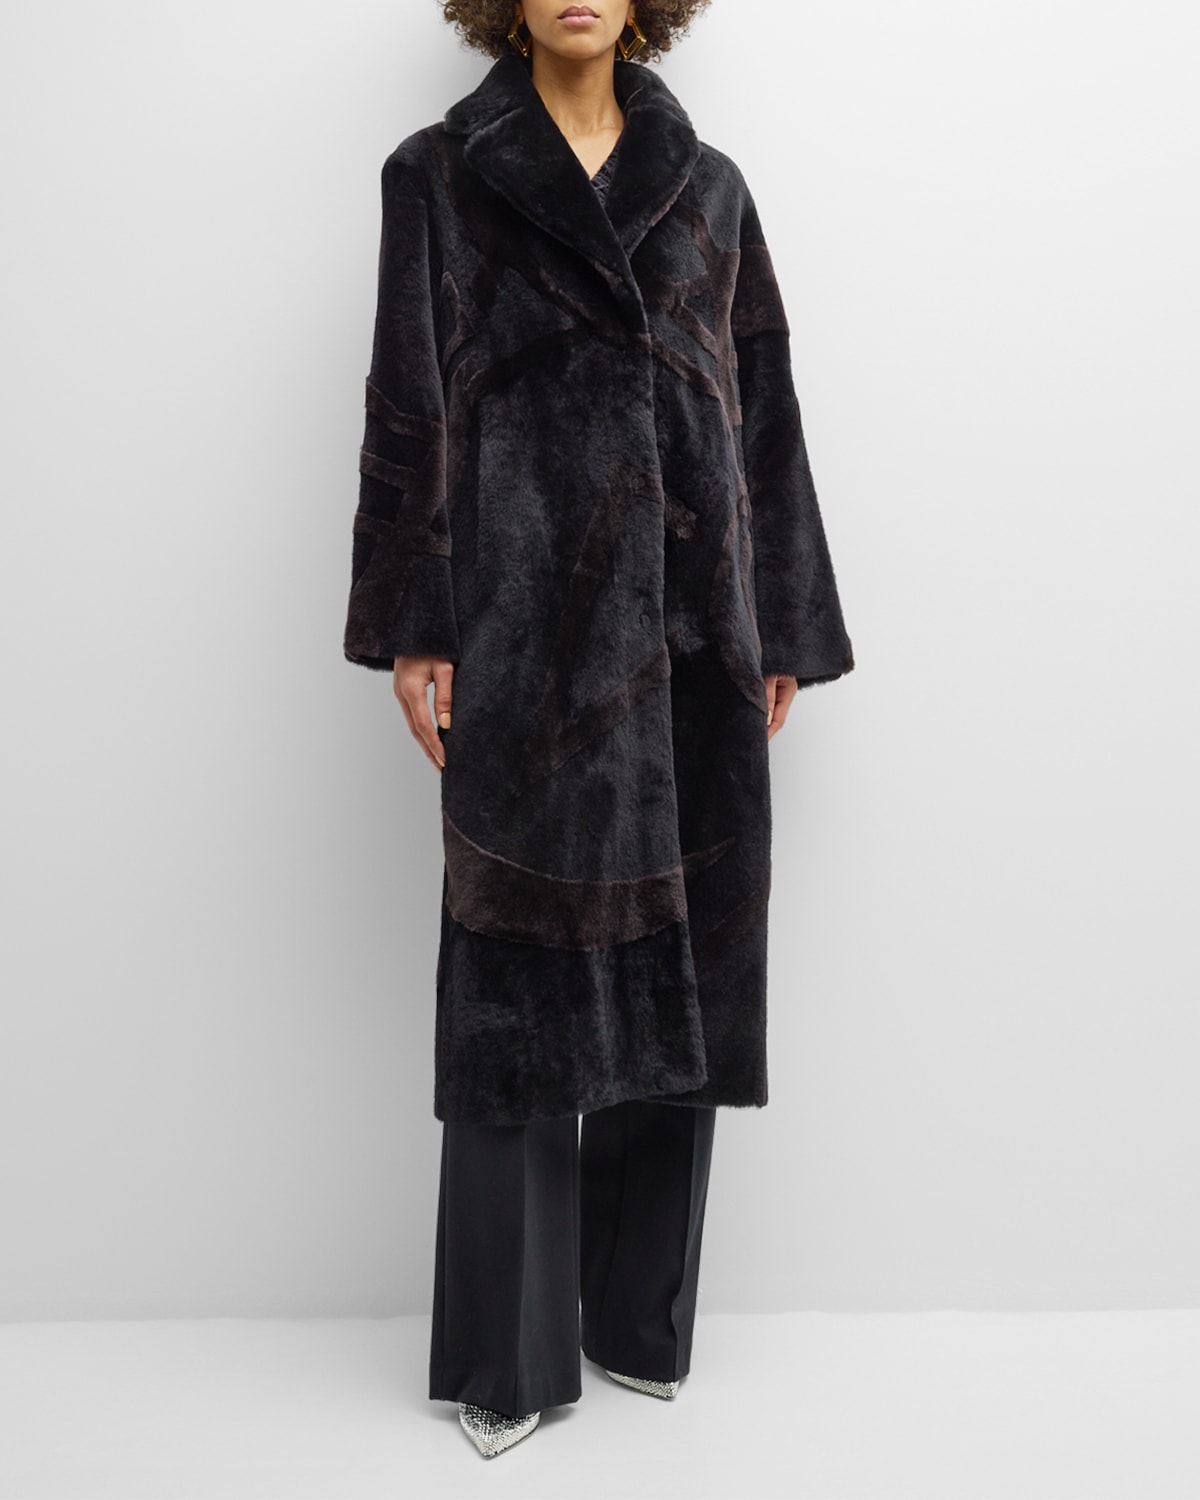 Gorski Abstract Intarsia Lamb Shearling Long Coat In Black / Brown